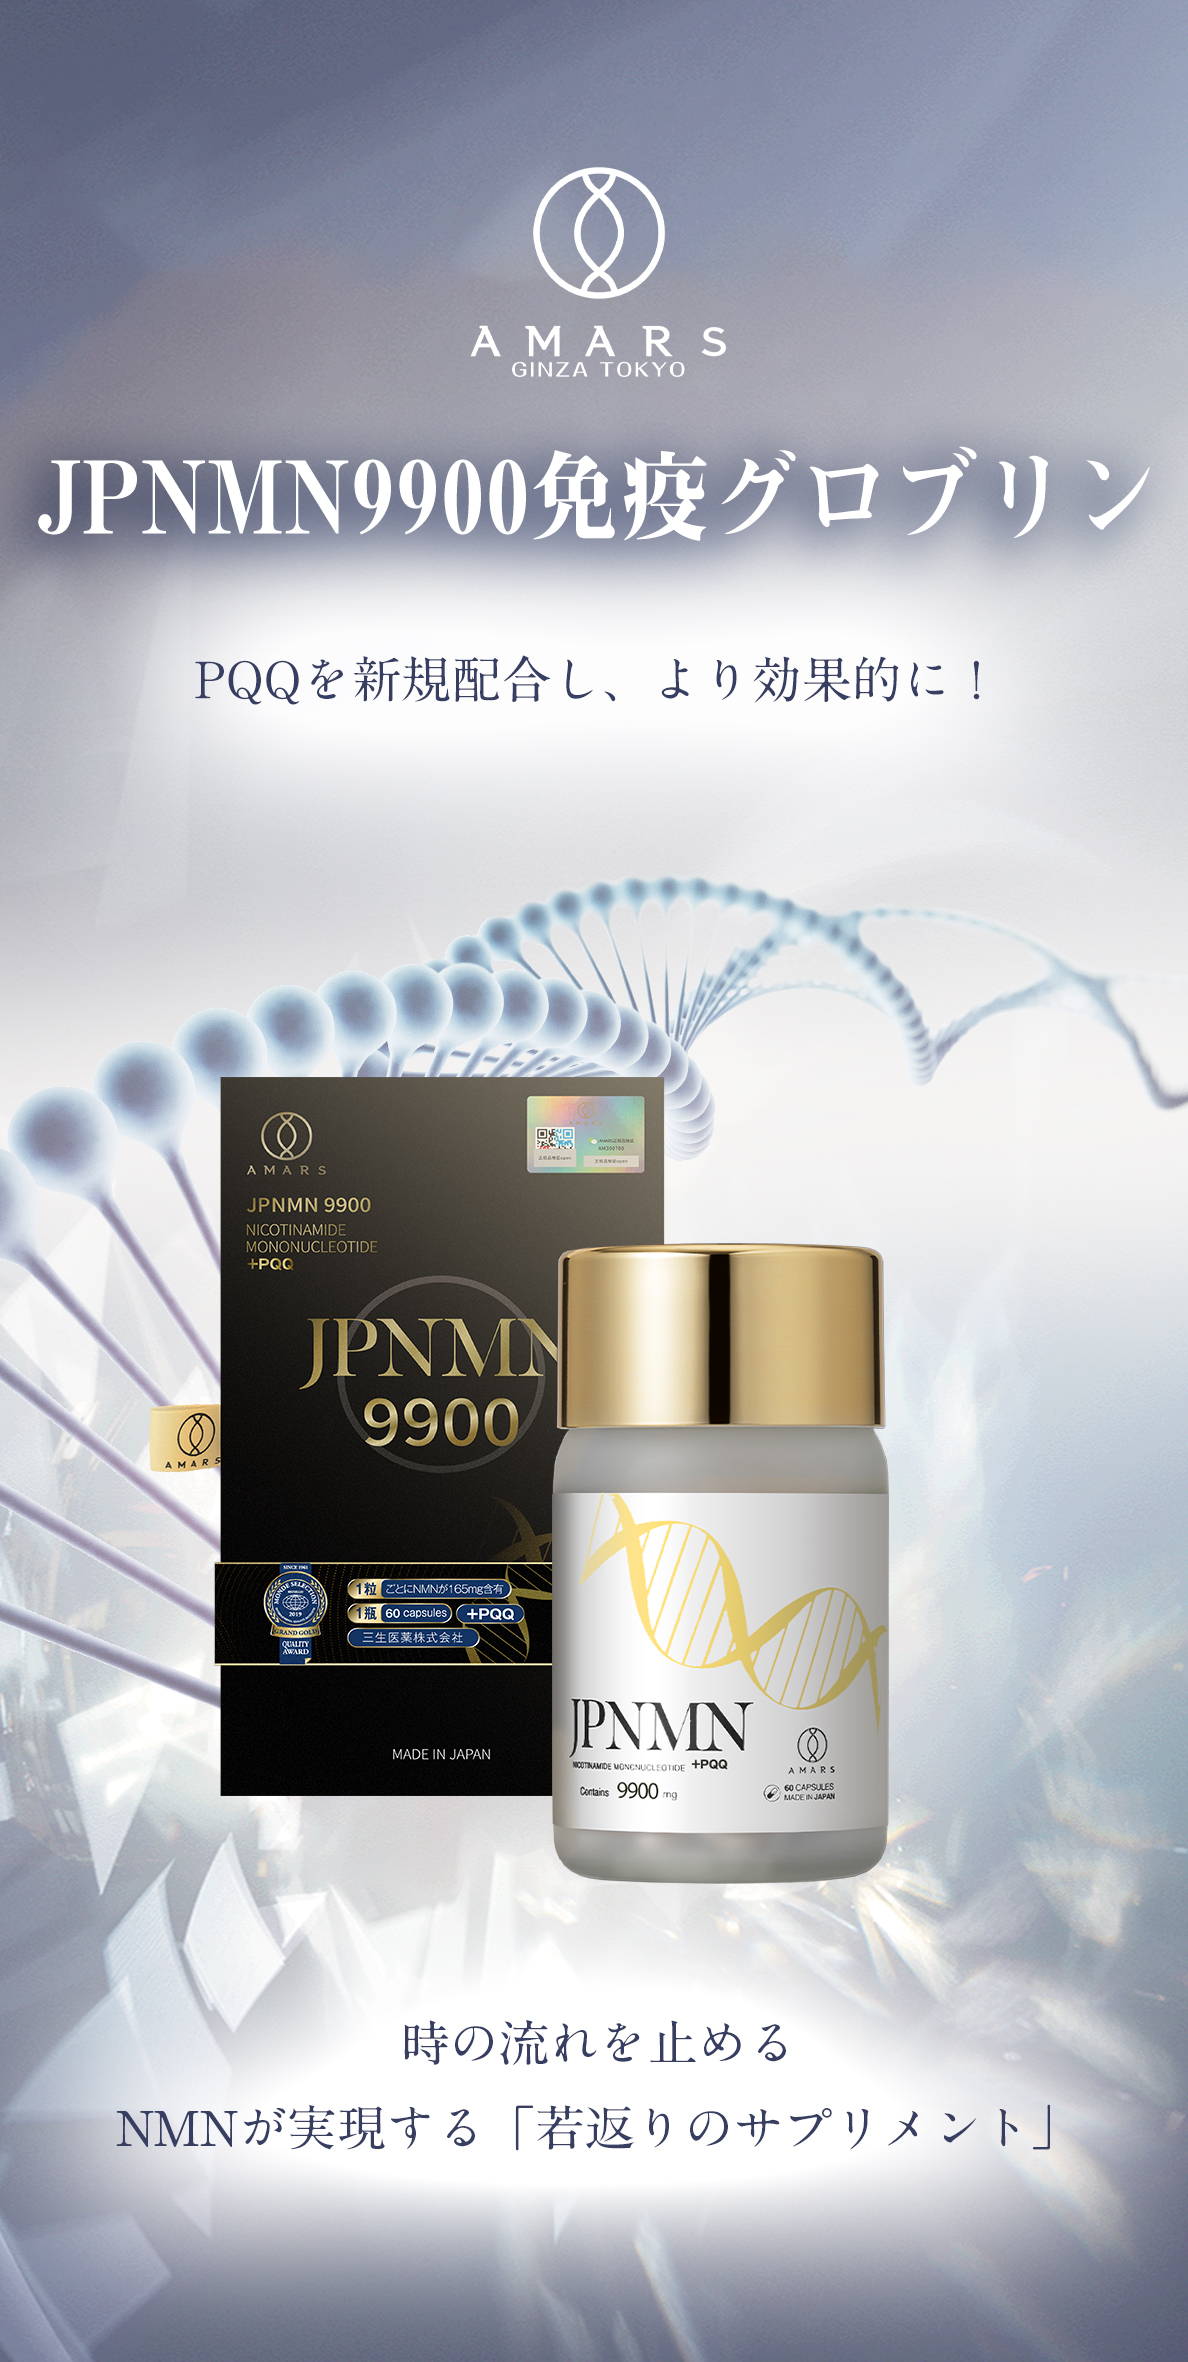 AMARS JPNMN9900 免疫グロブリン 60粒